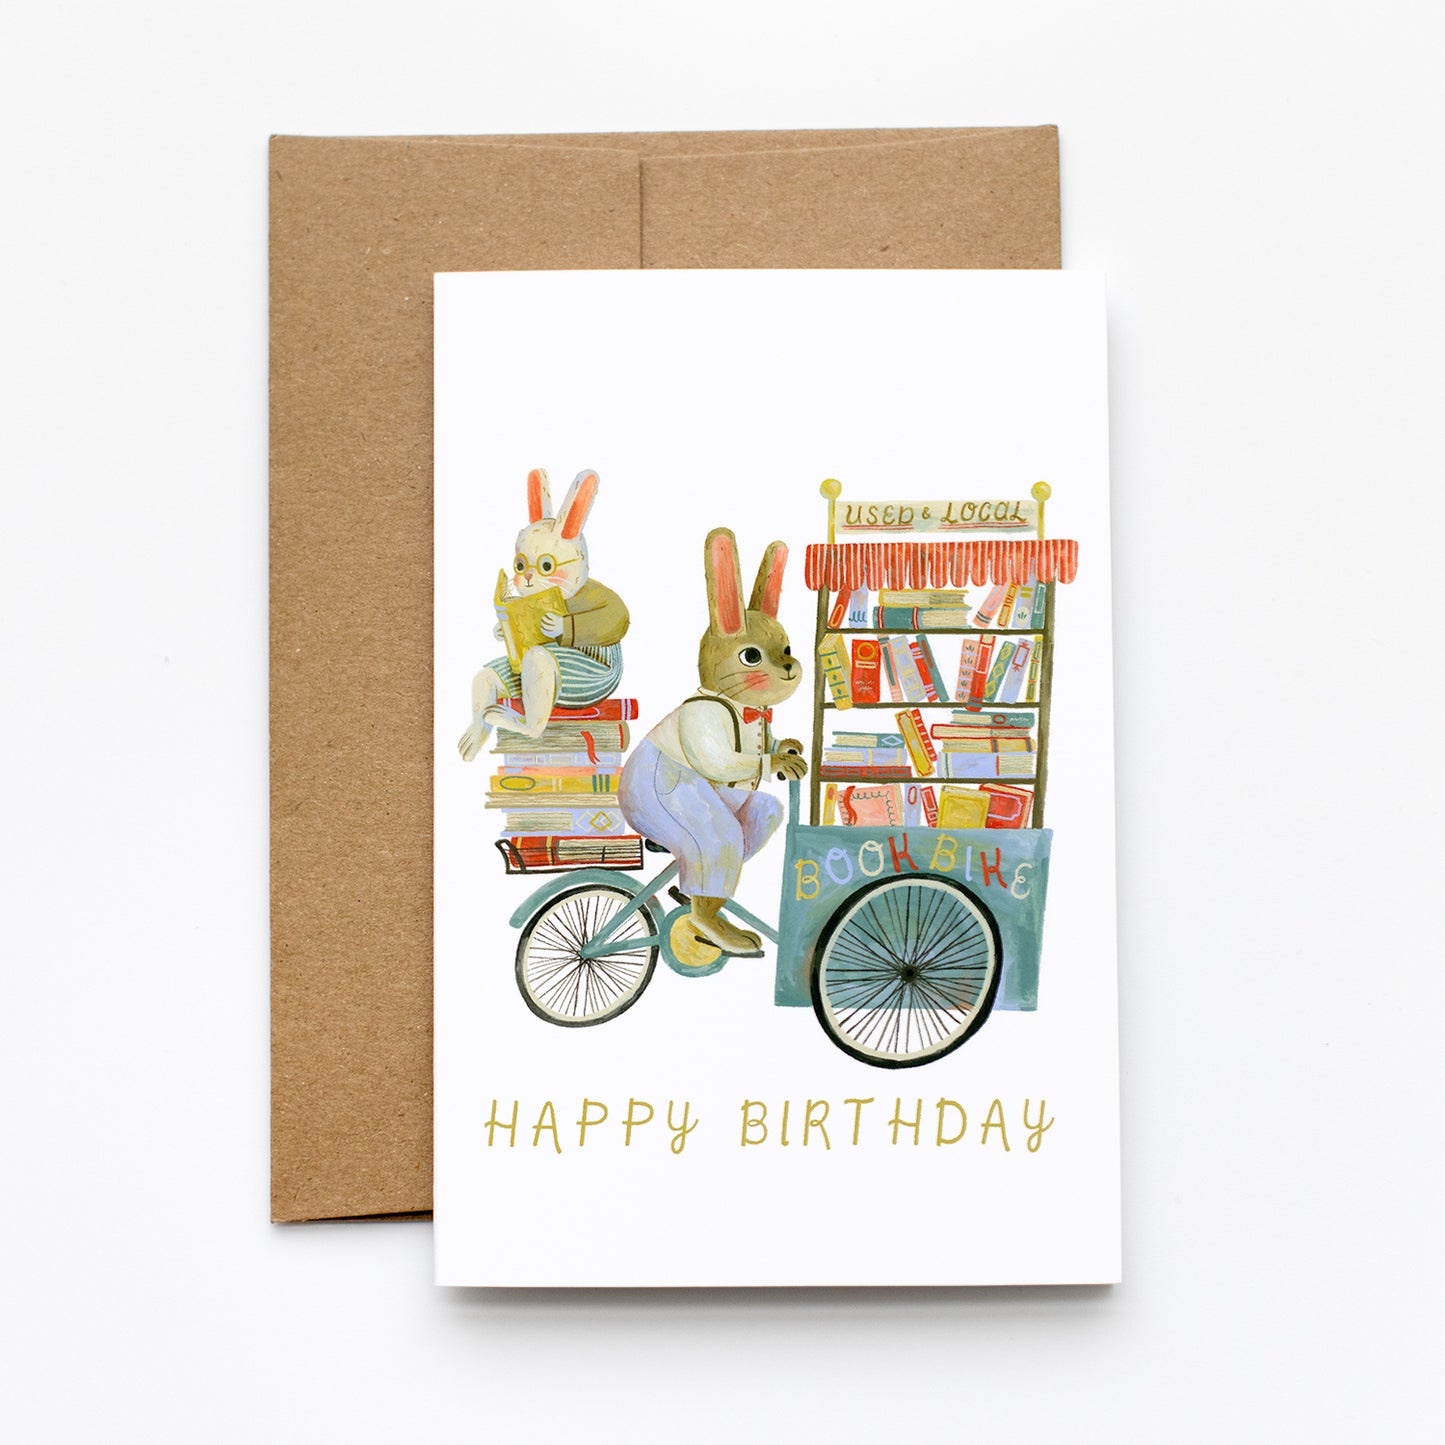 book bike birthday | Card + Envelope